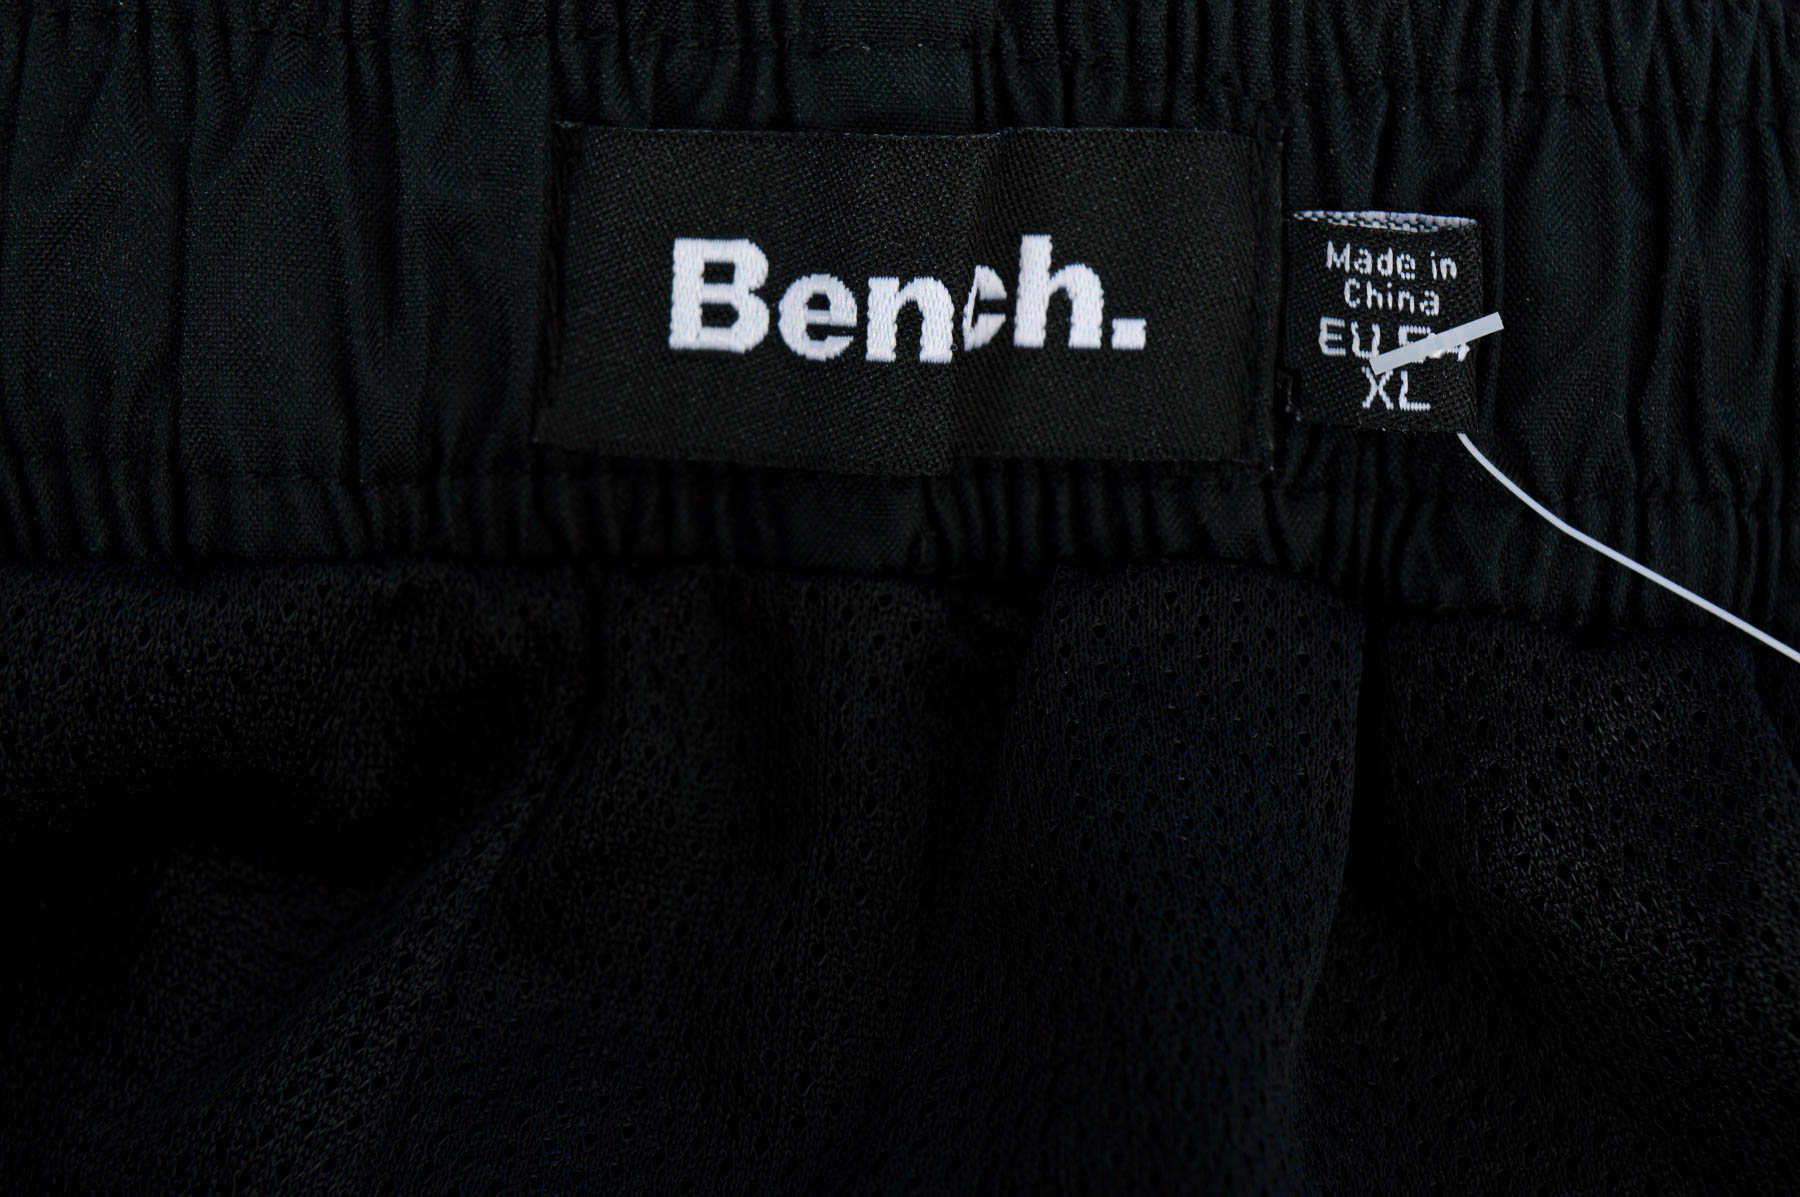 Men's shorts - Bench. - 2